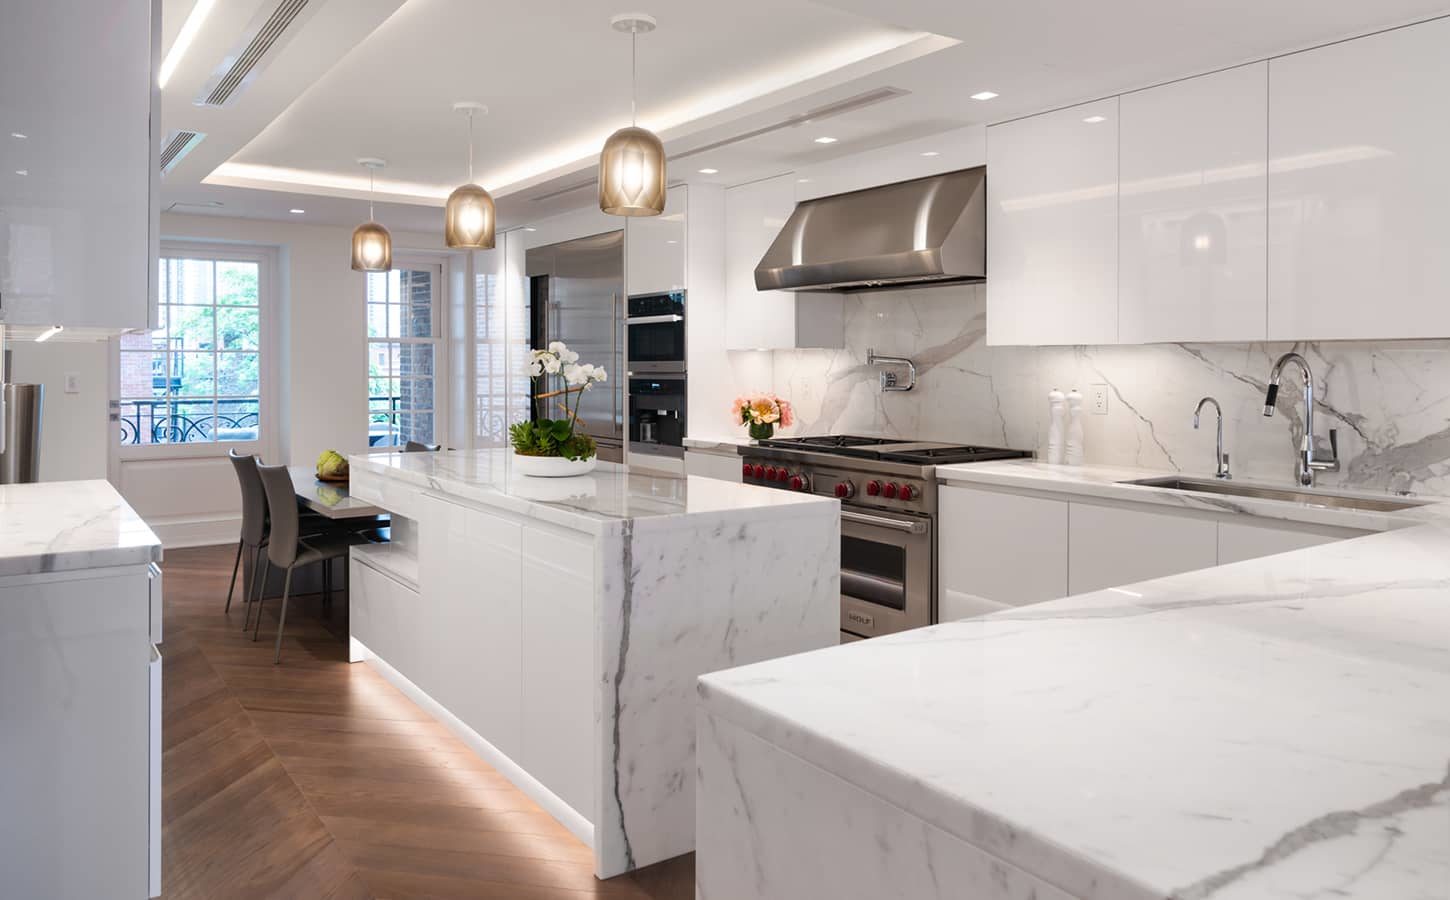 Adige Luxury Residential Property Project in Boston